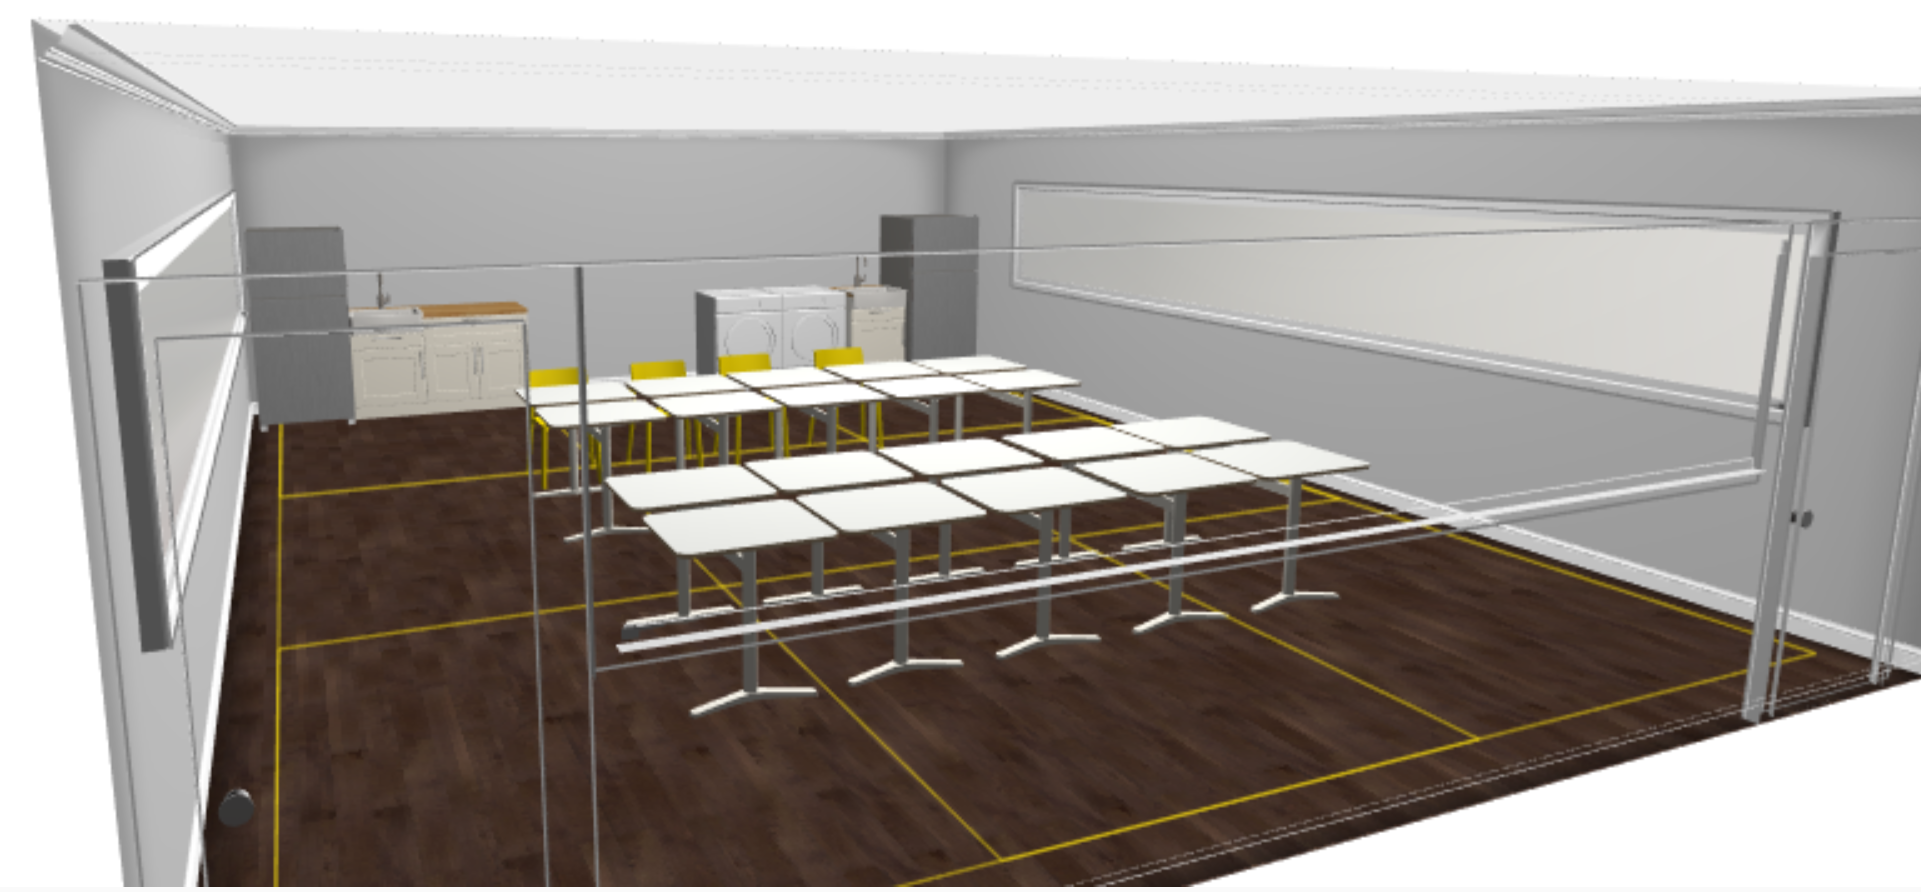 Concept rendering of the multi-purpose room